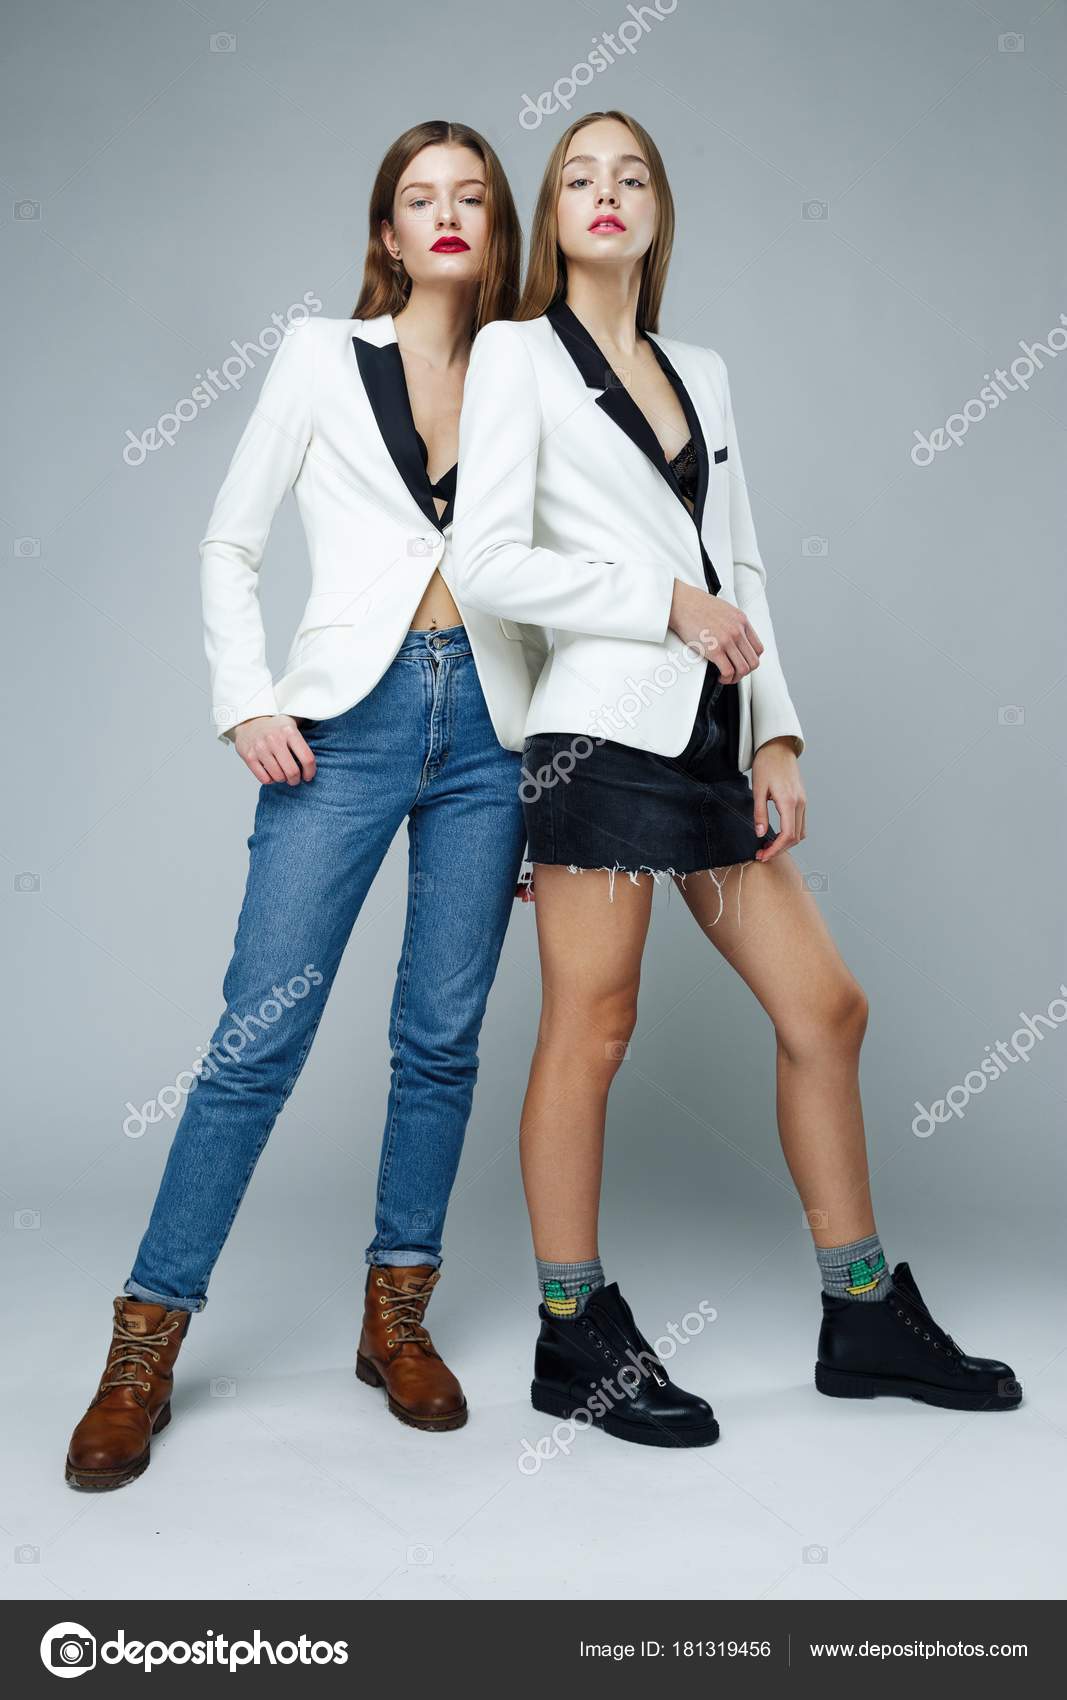 Free image: confident duo: symmetric fashion shoot with two head-to-head  models - Premium Free AI Generated stock photos - Free image: confident  duo: symmetric fashion shoot with two head-to-head models - Premium